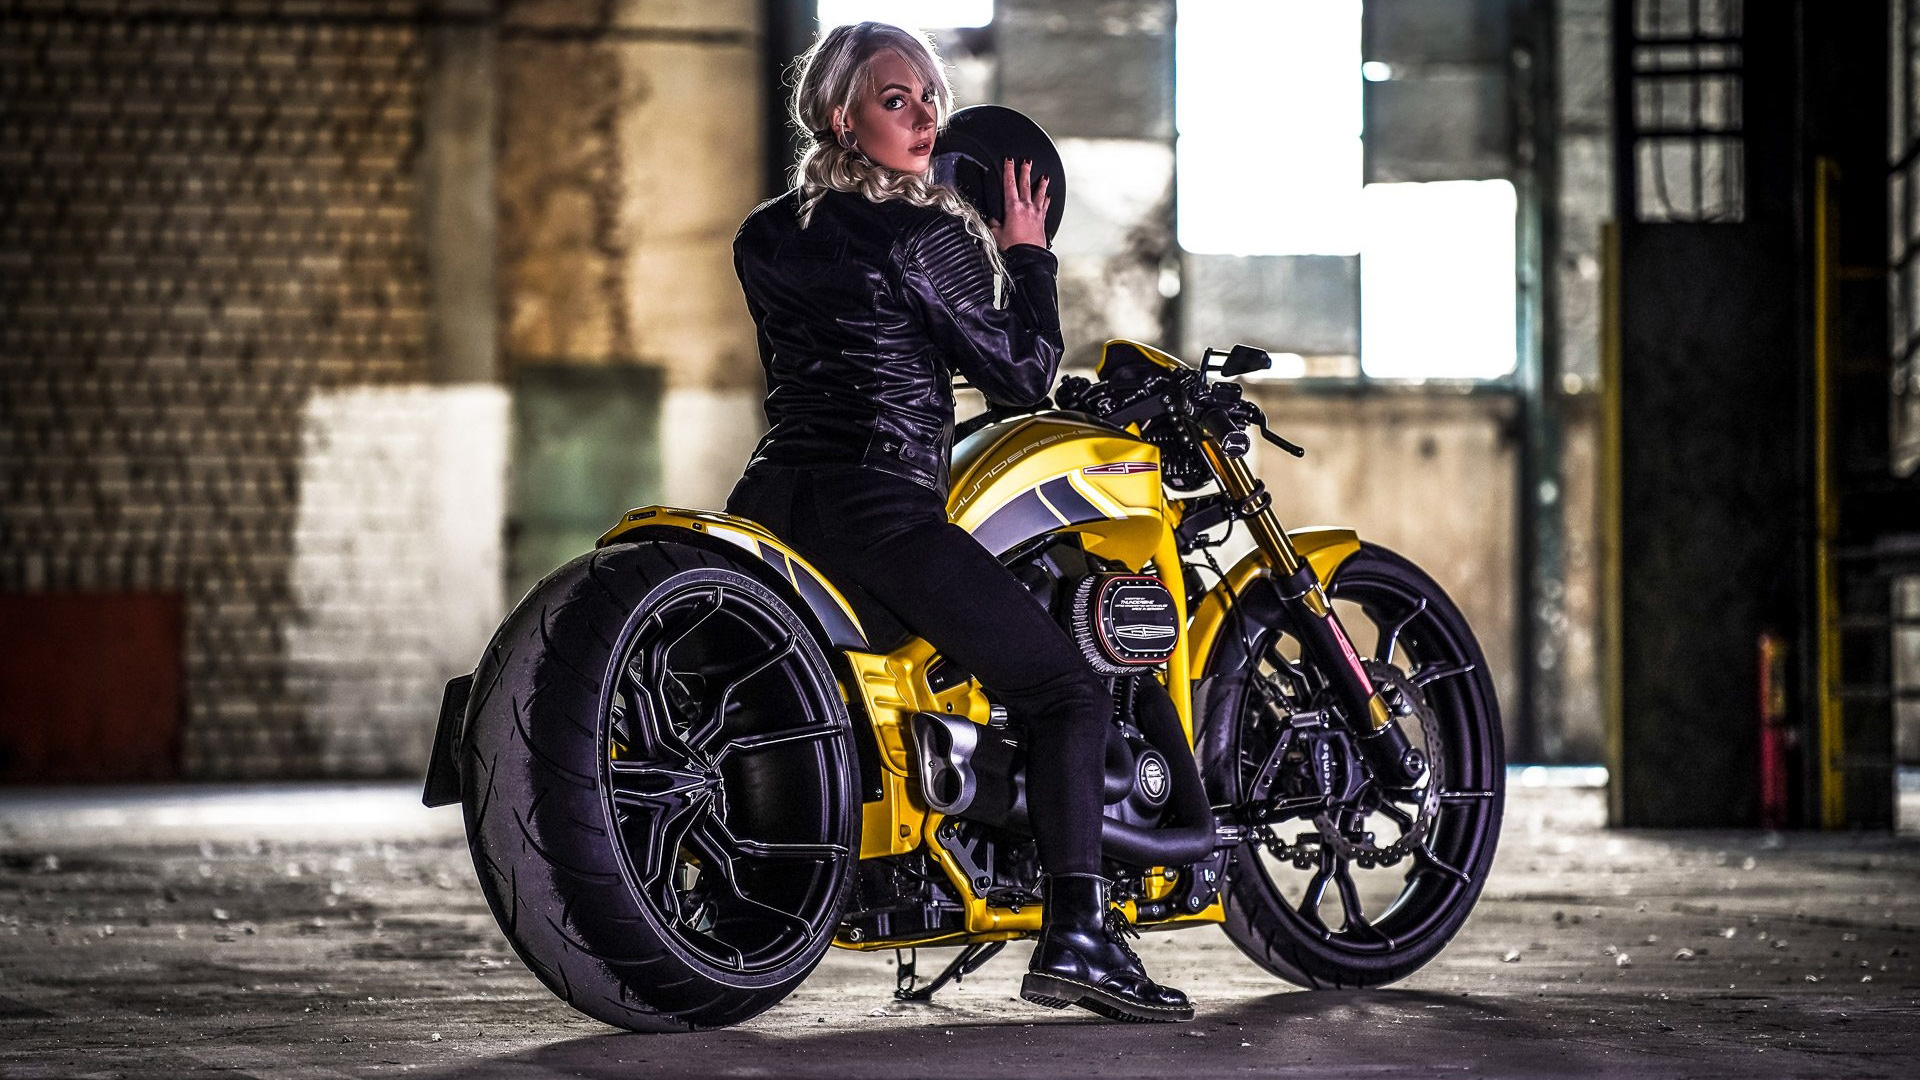 Thunderbike Gf and blonde model